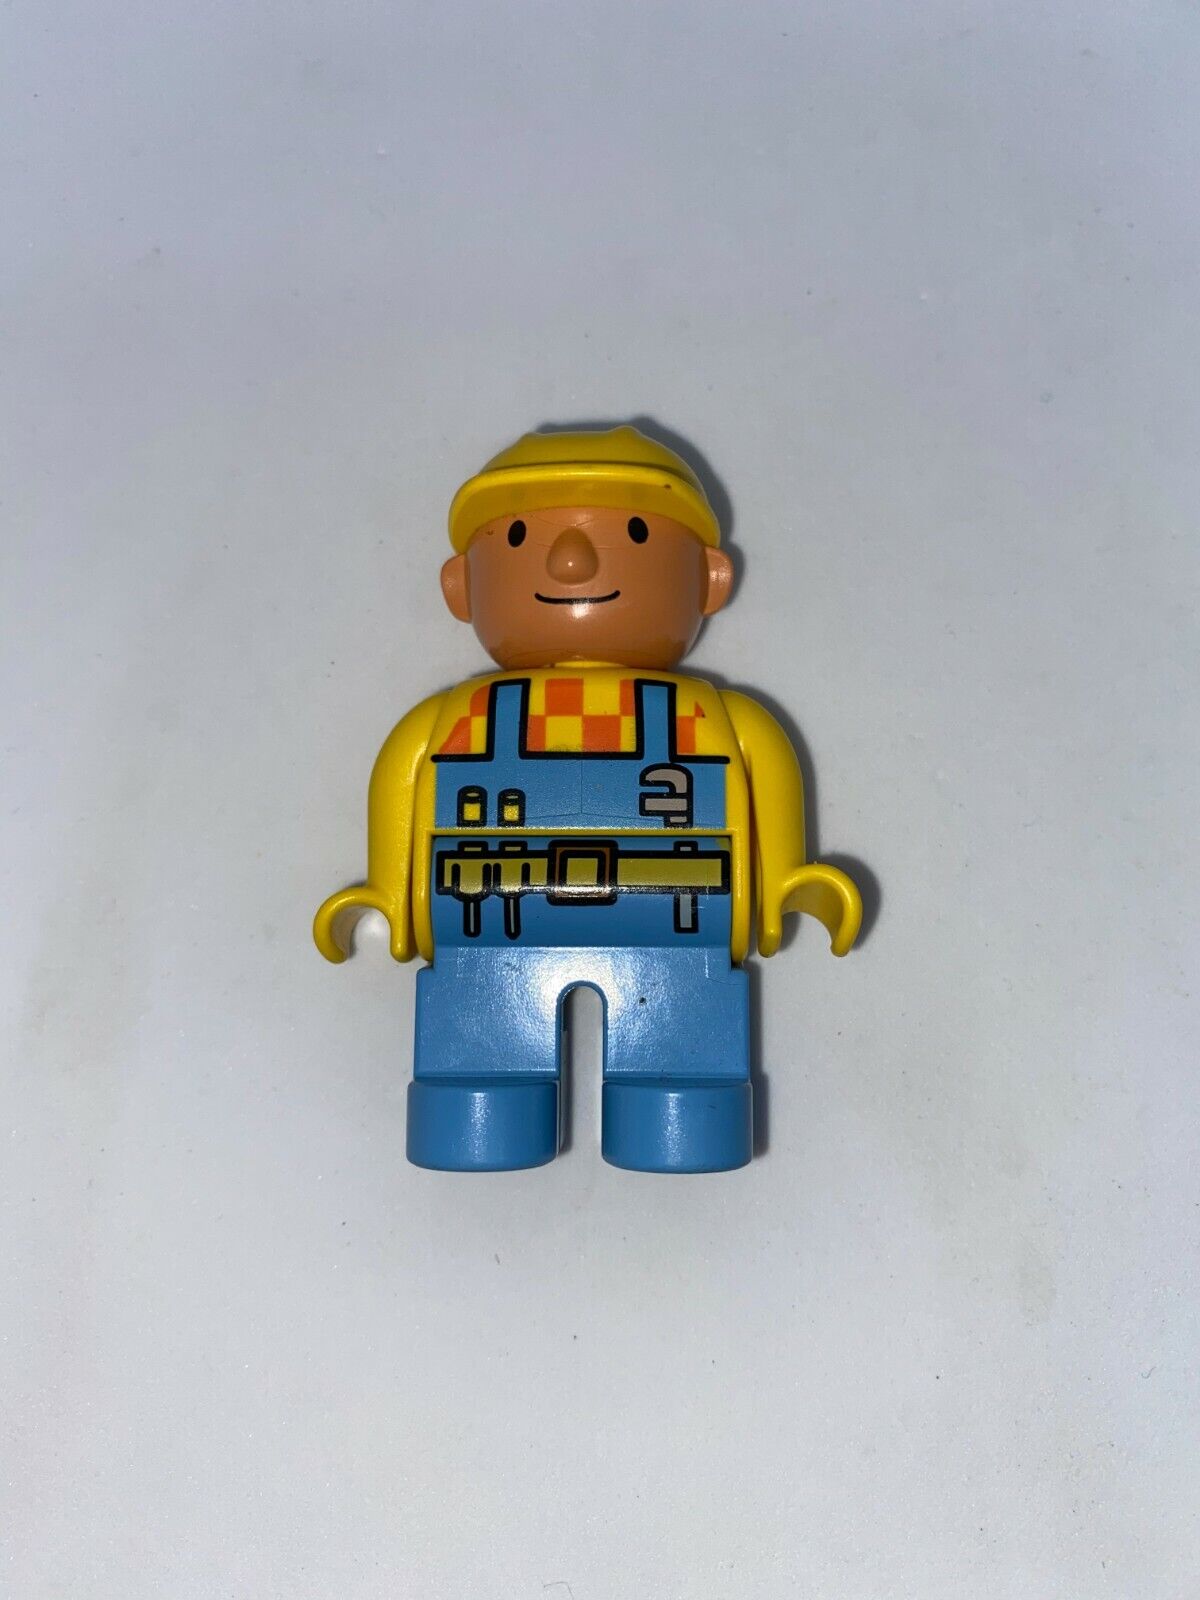 LEGO Duplo Bob The Builder Replacement Figure for Sale - Fleetwoodmac.net